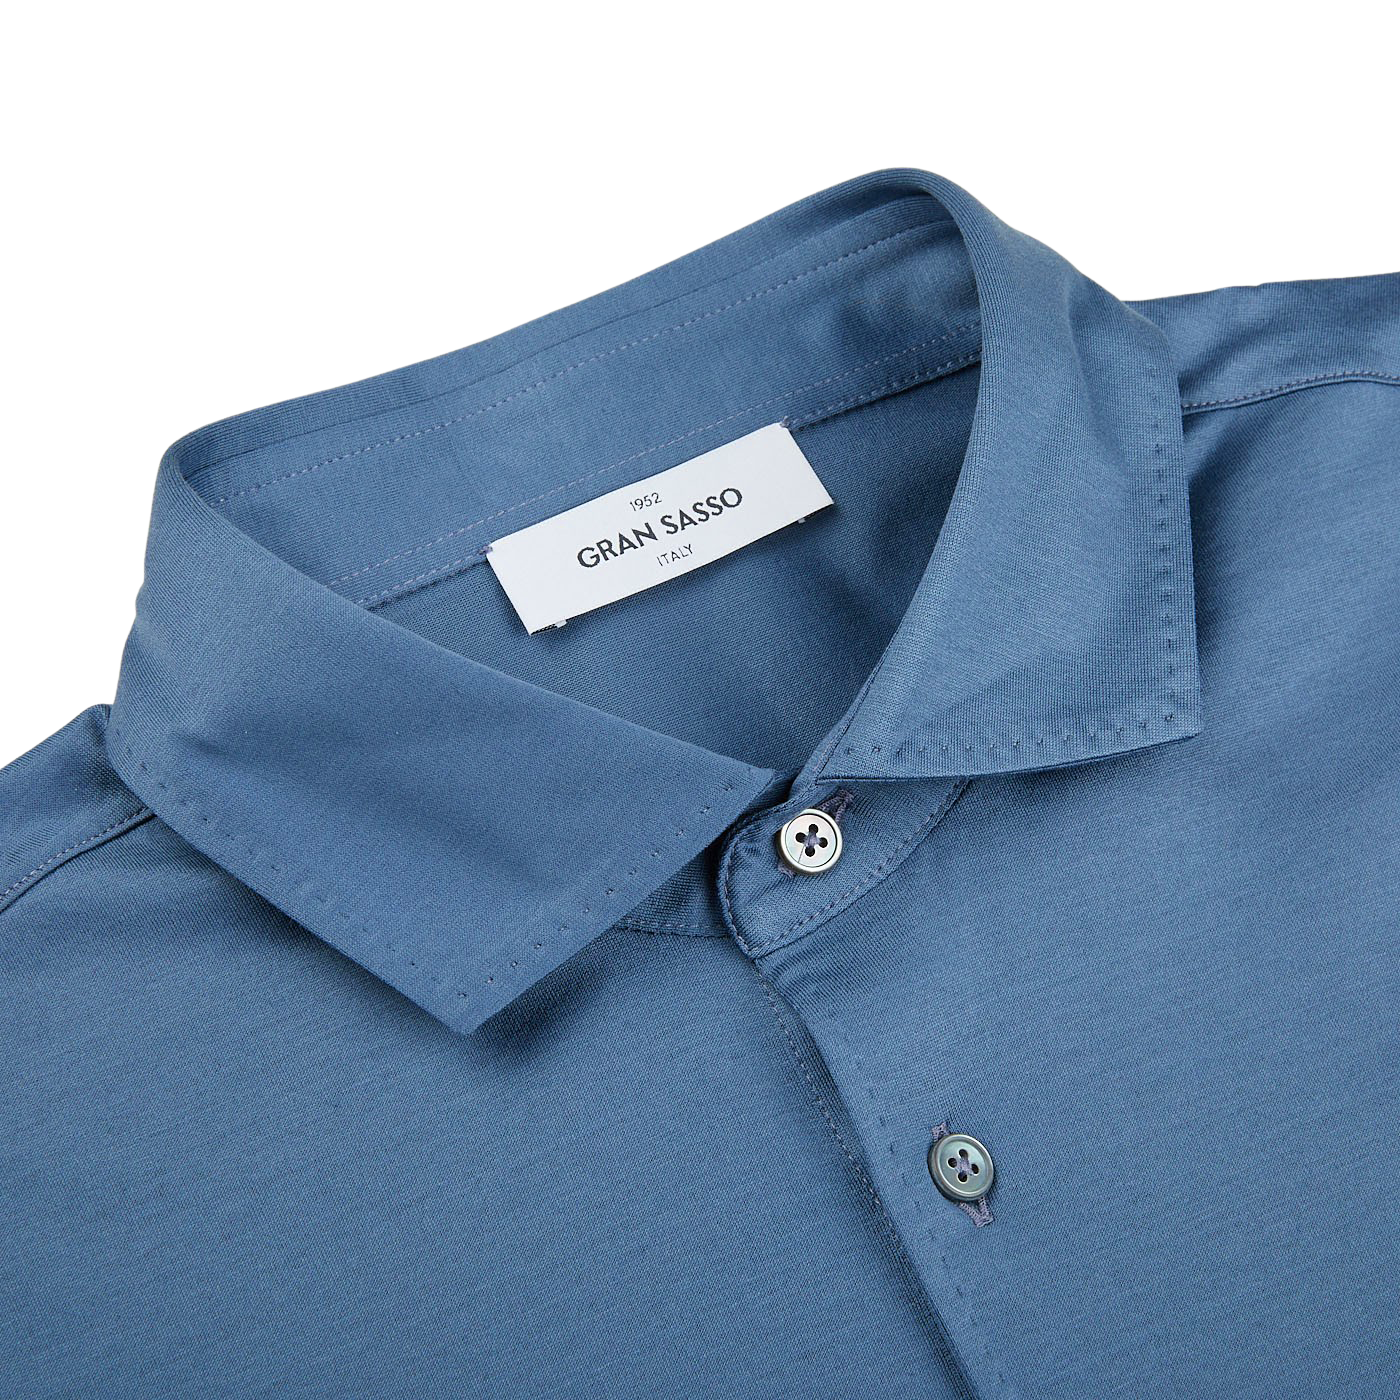 A close up of a Gran Sasso Dark Blue Cotton Filo Scozia Polo Shirt.